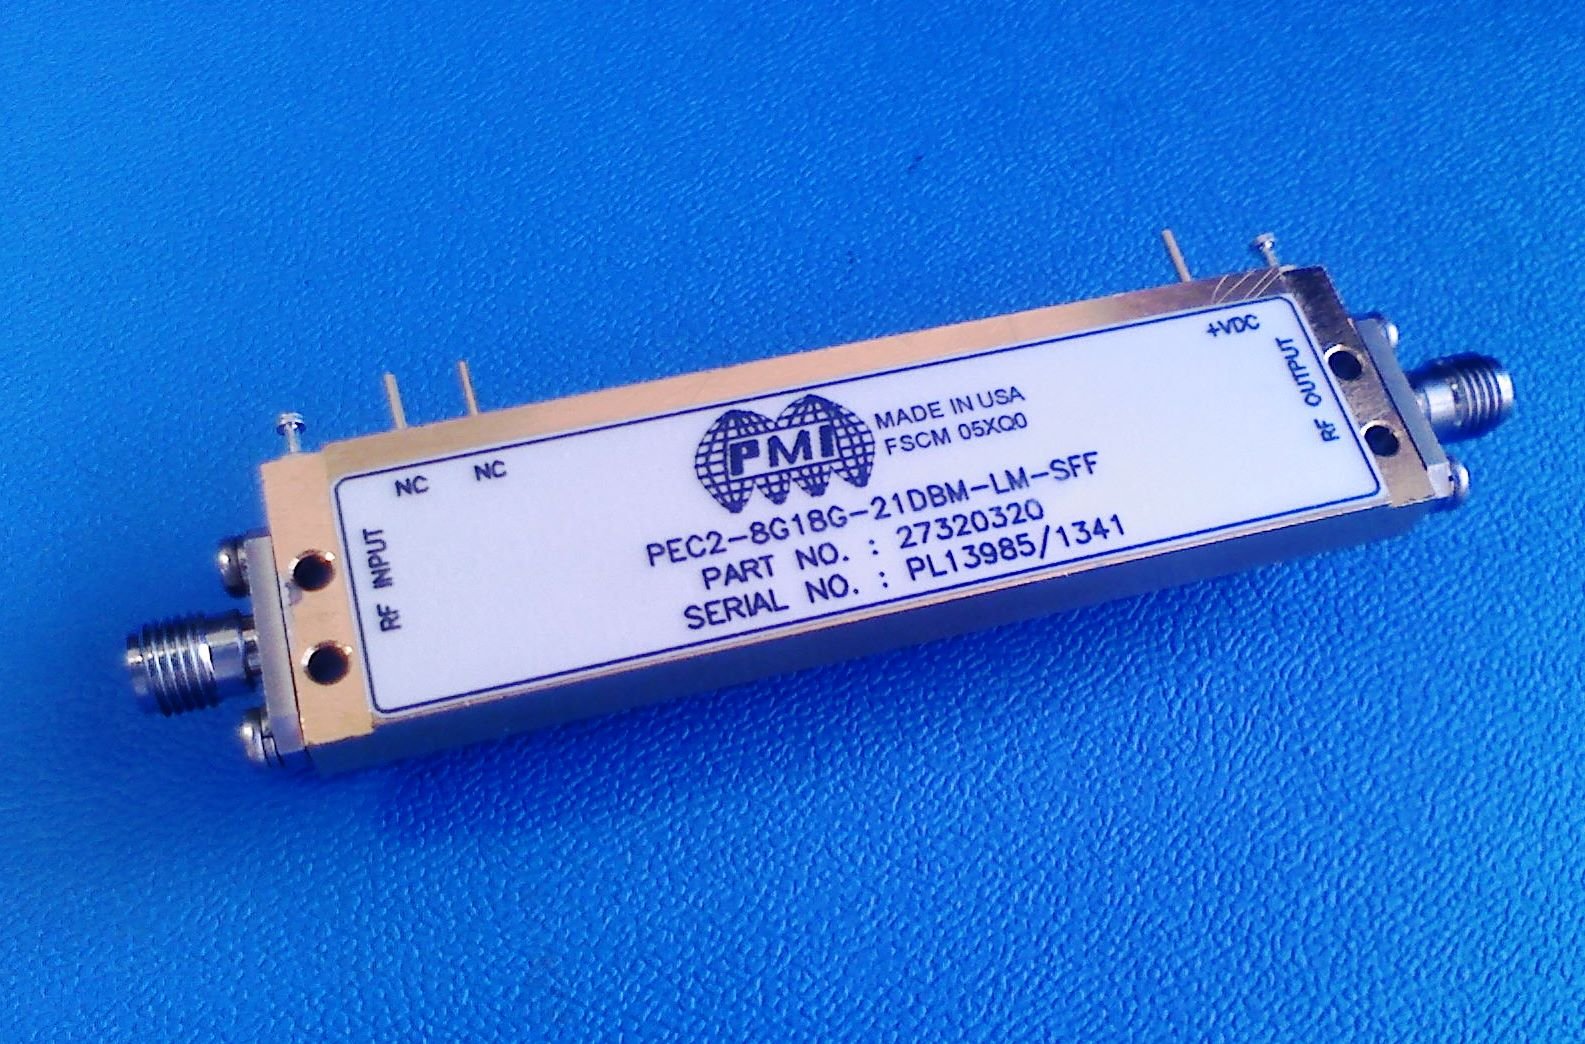 PEC2-8G18G-21DBM-LM-SFF Limiting Amplifier